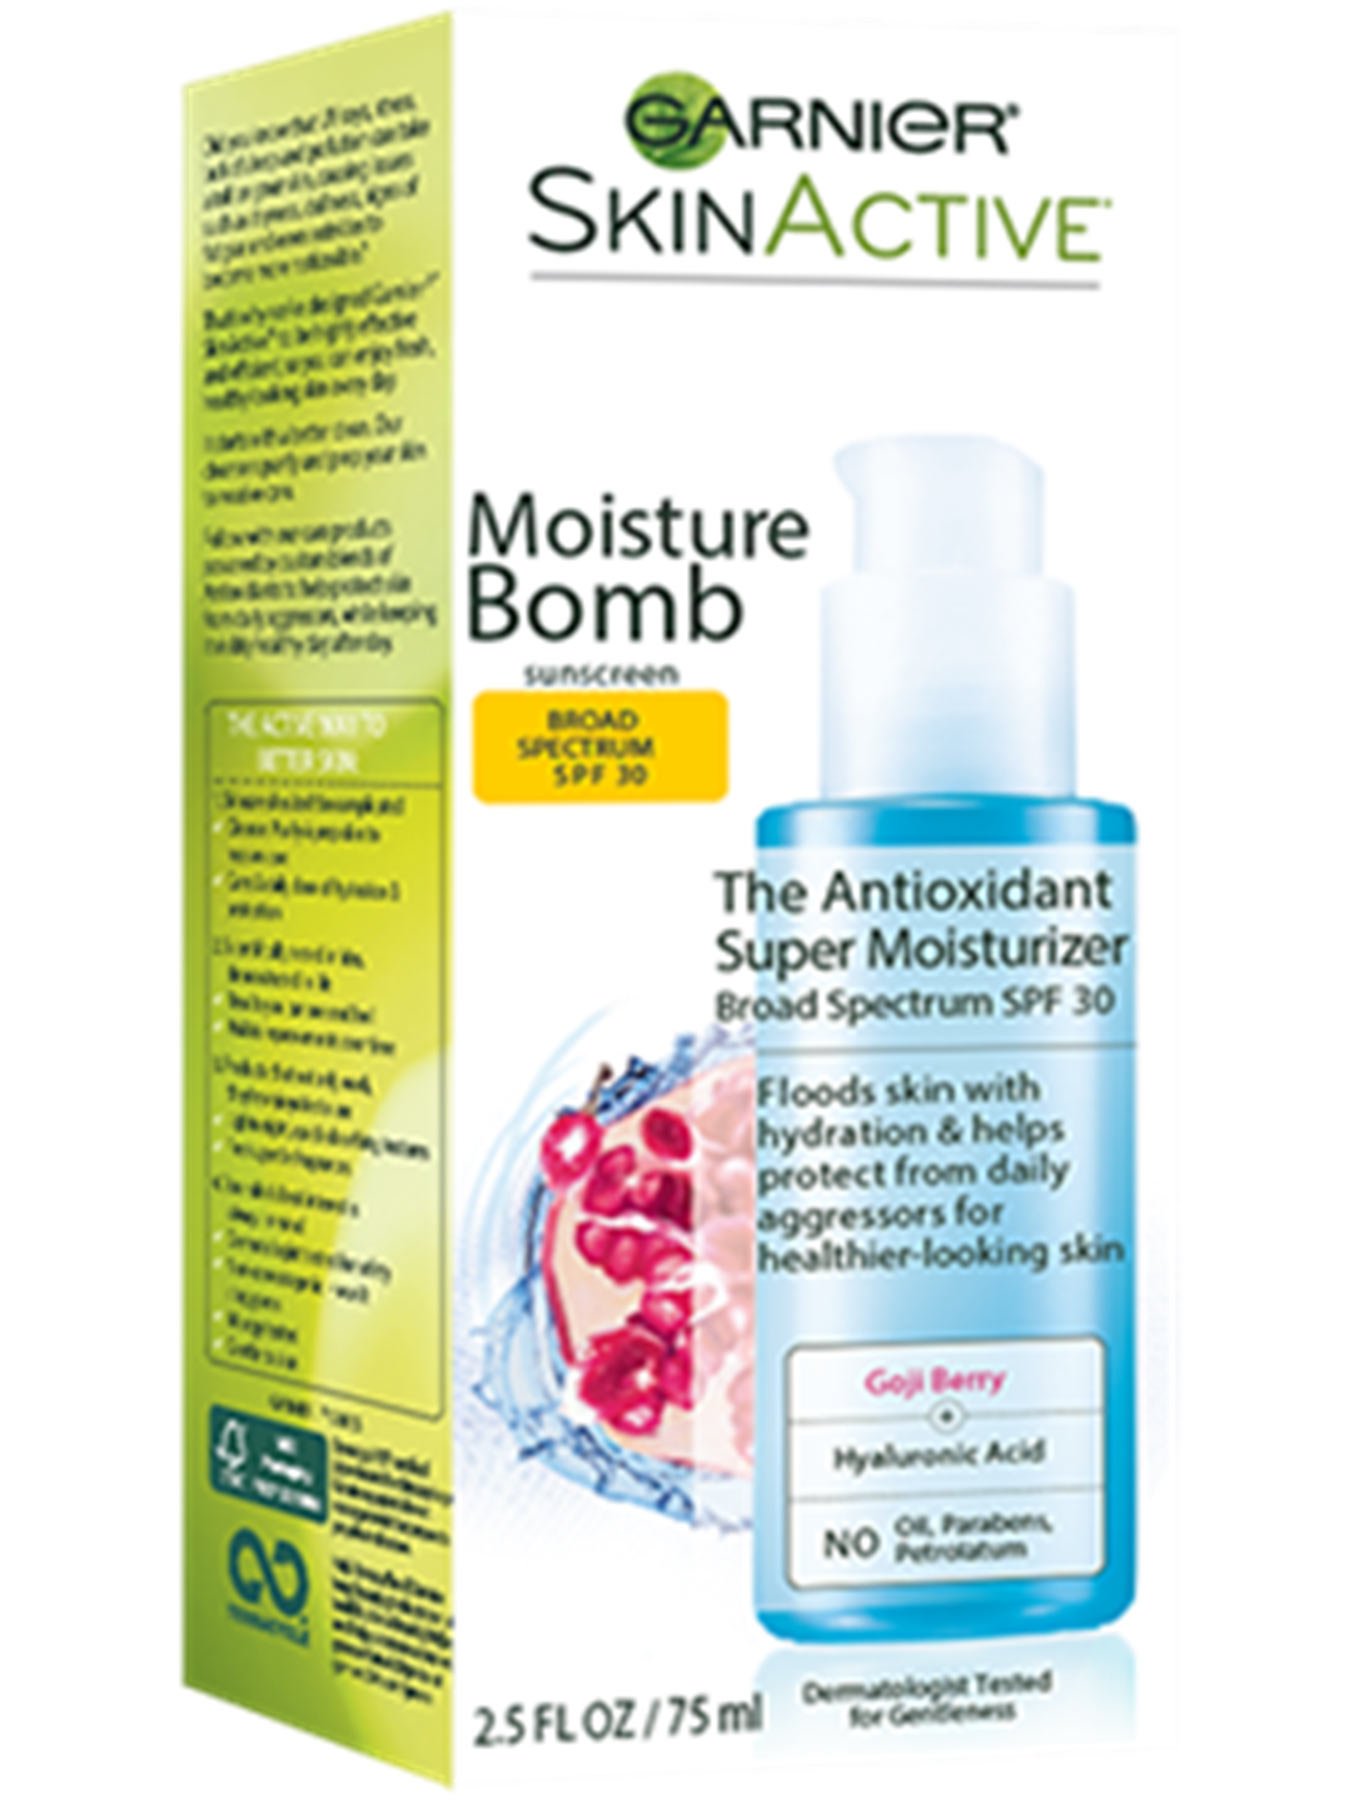 garnier_skinactive_moisture_bomb_the_antioxidant_super_moisturizer_spf_skin care_productshot_2